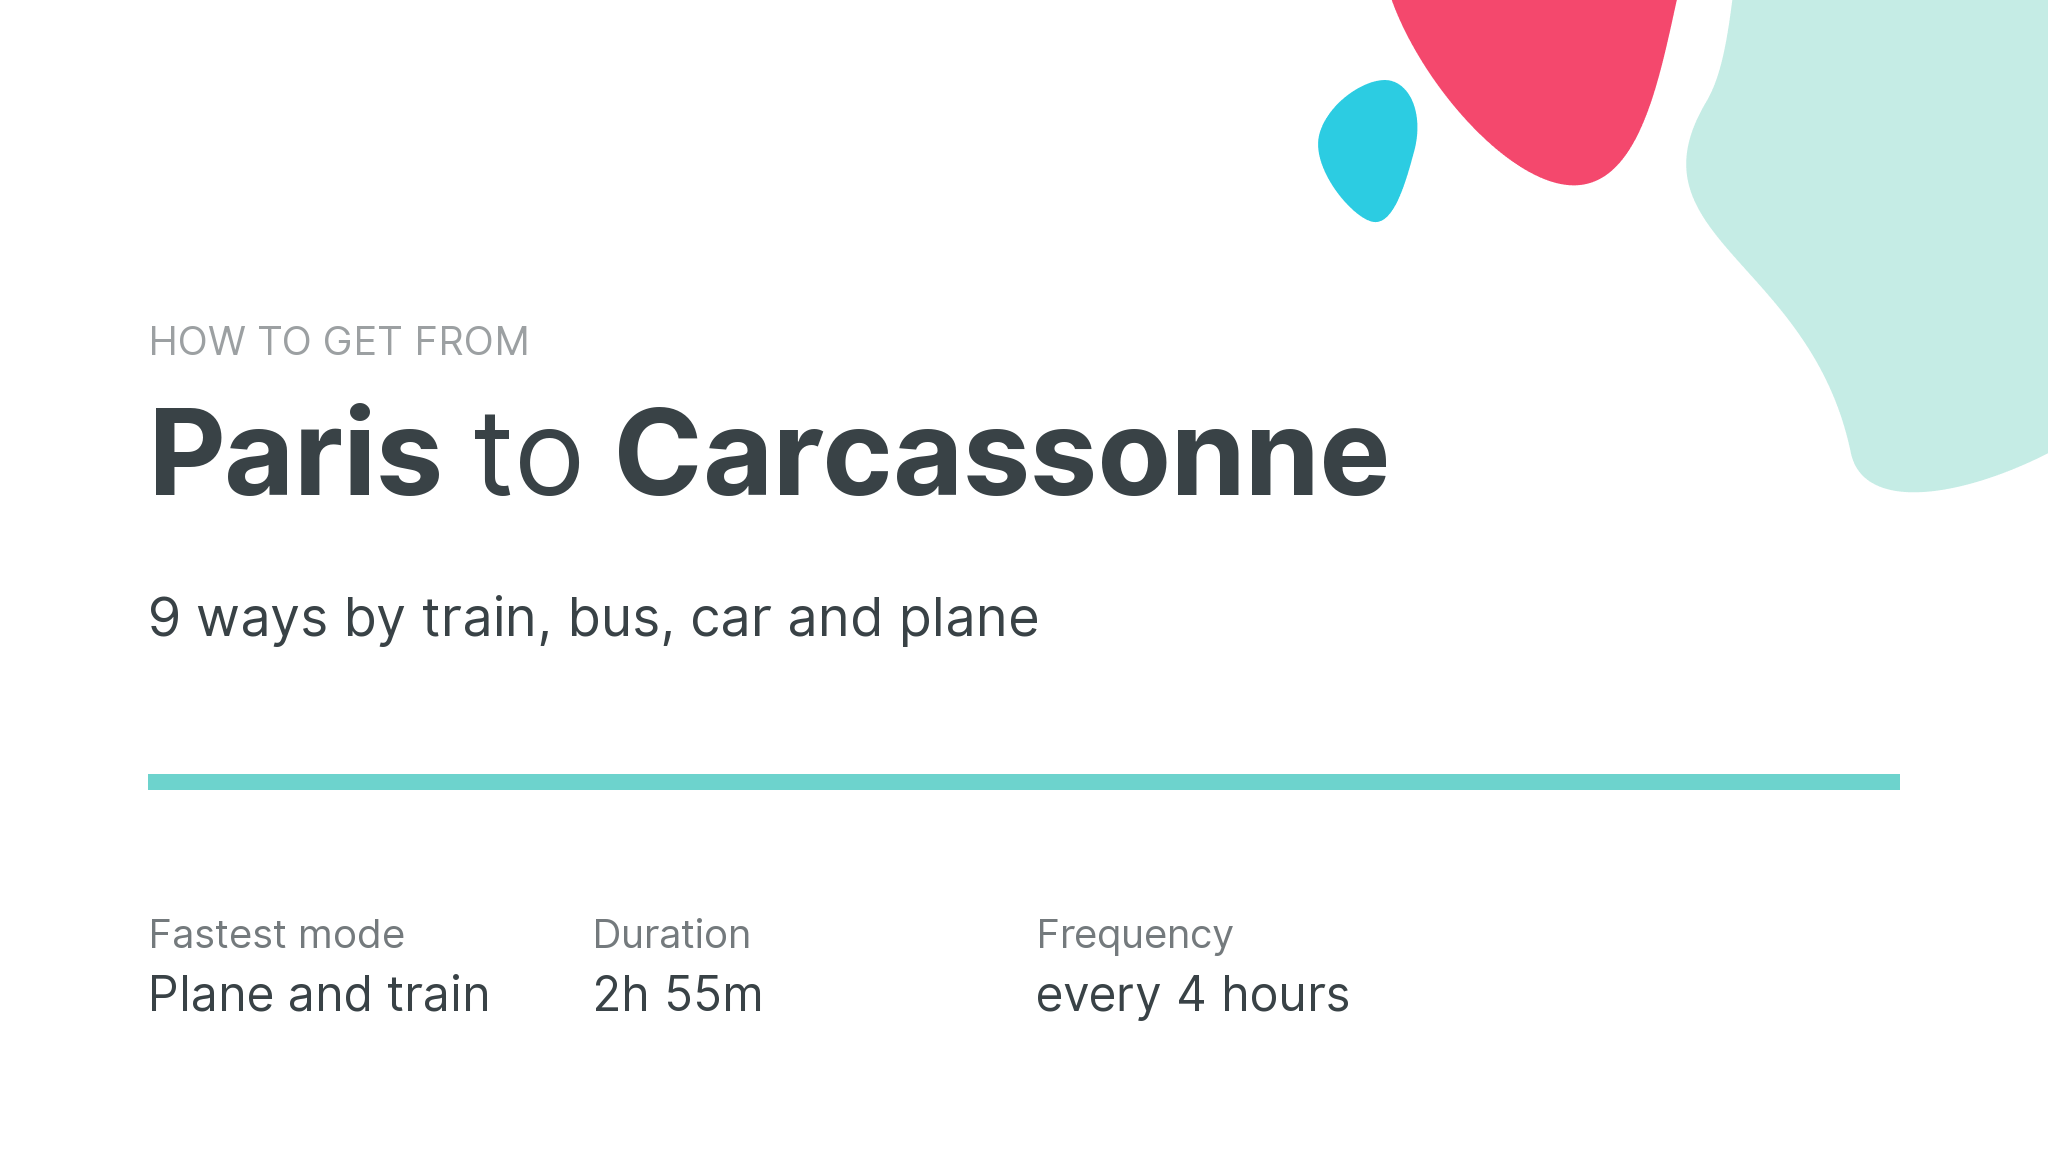 How do I get from Paris to Carcassonne